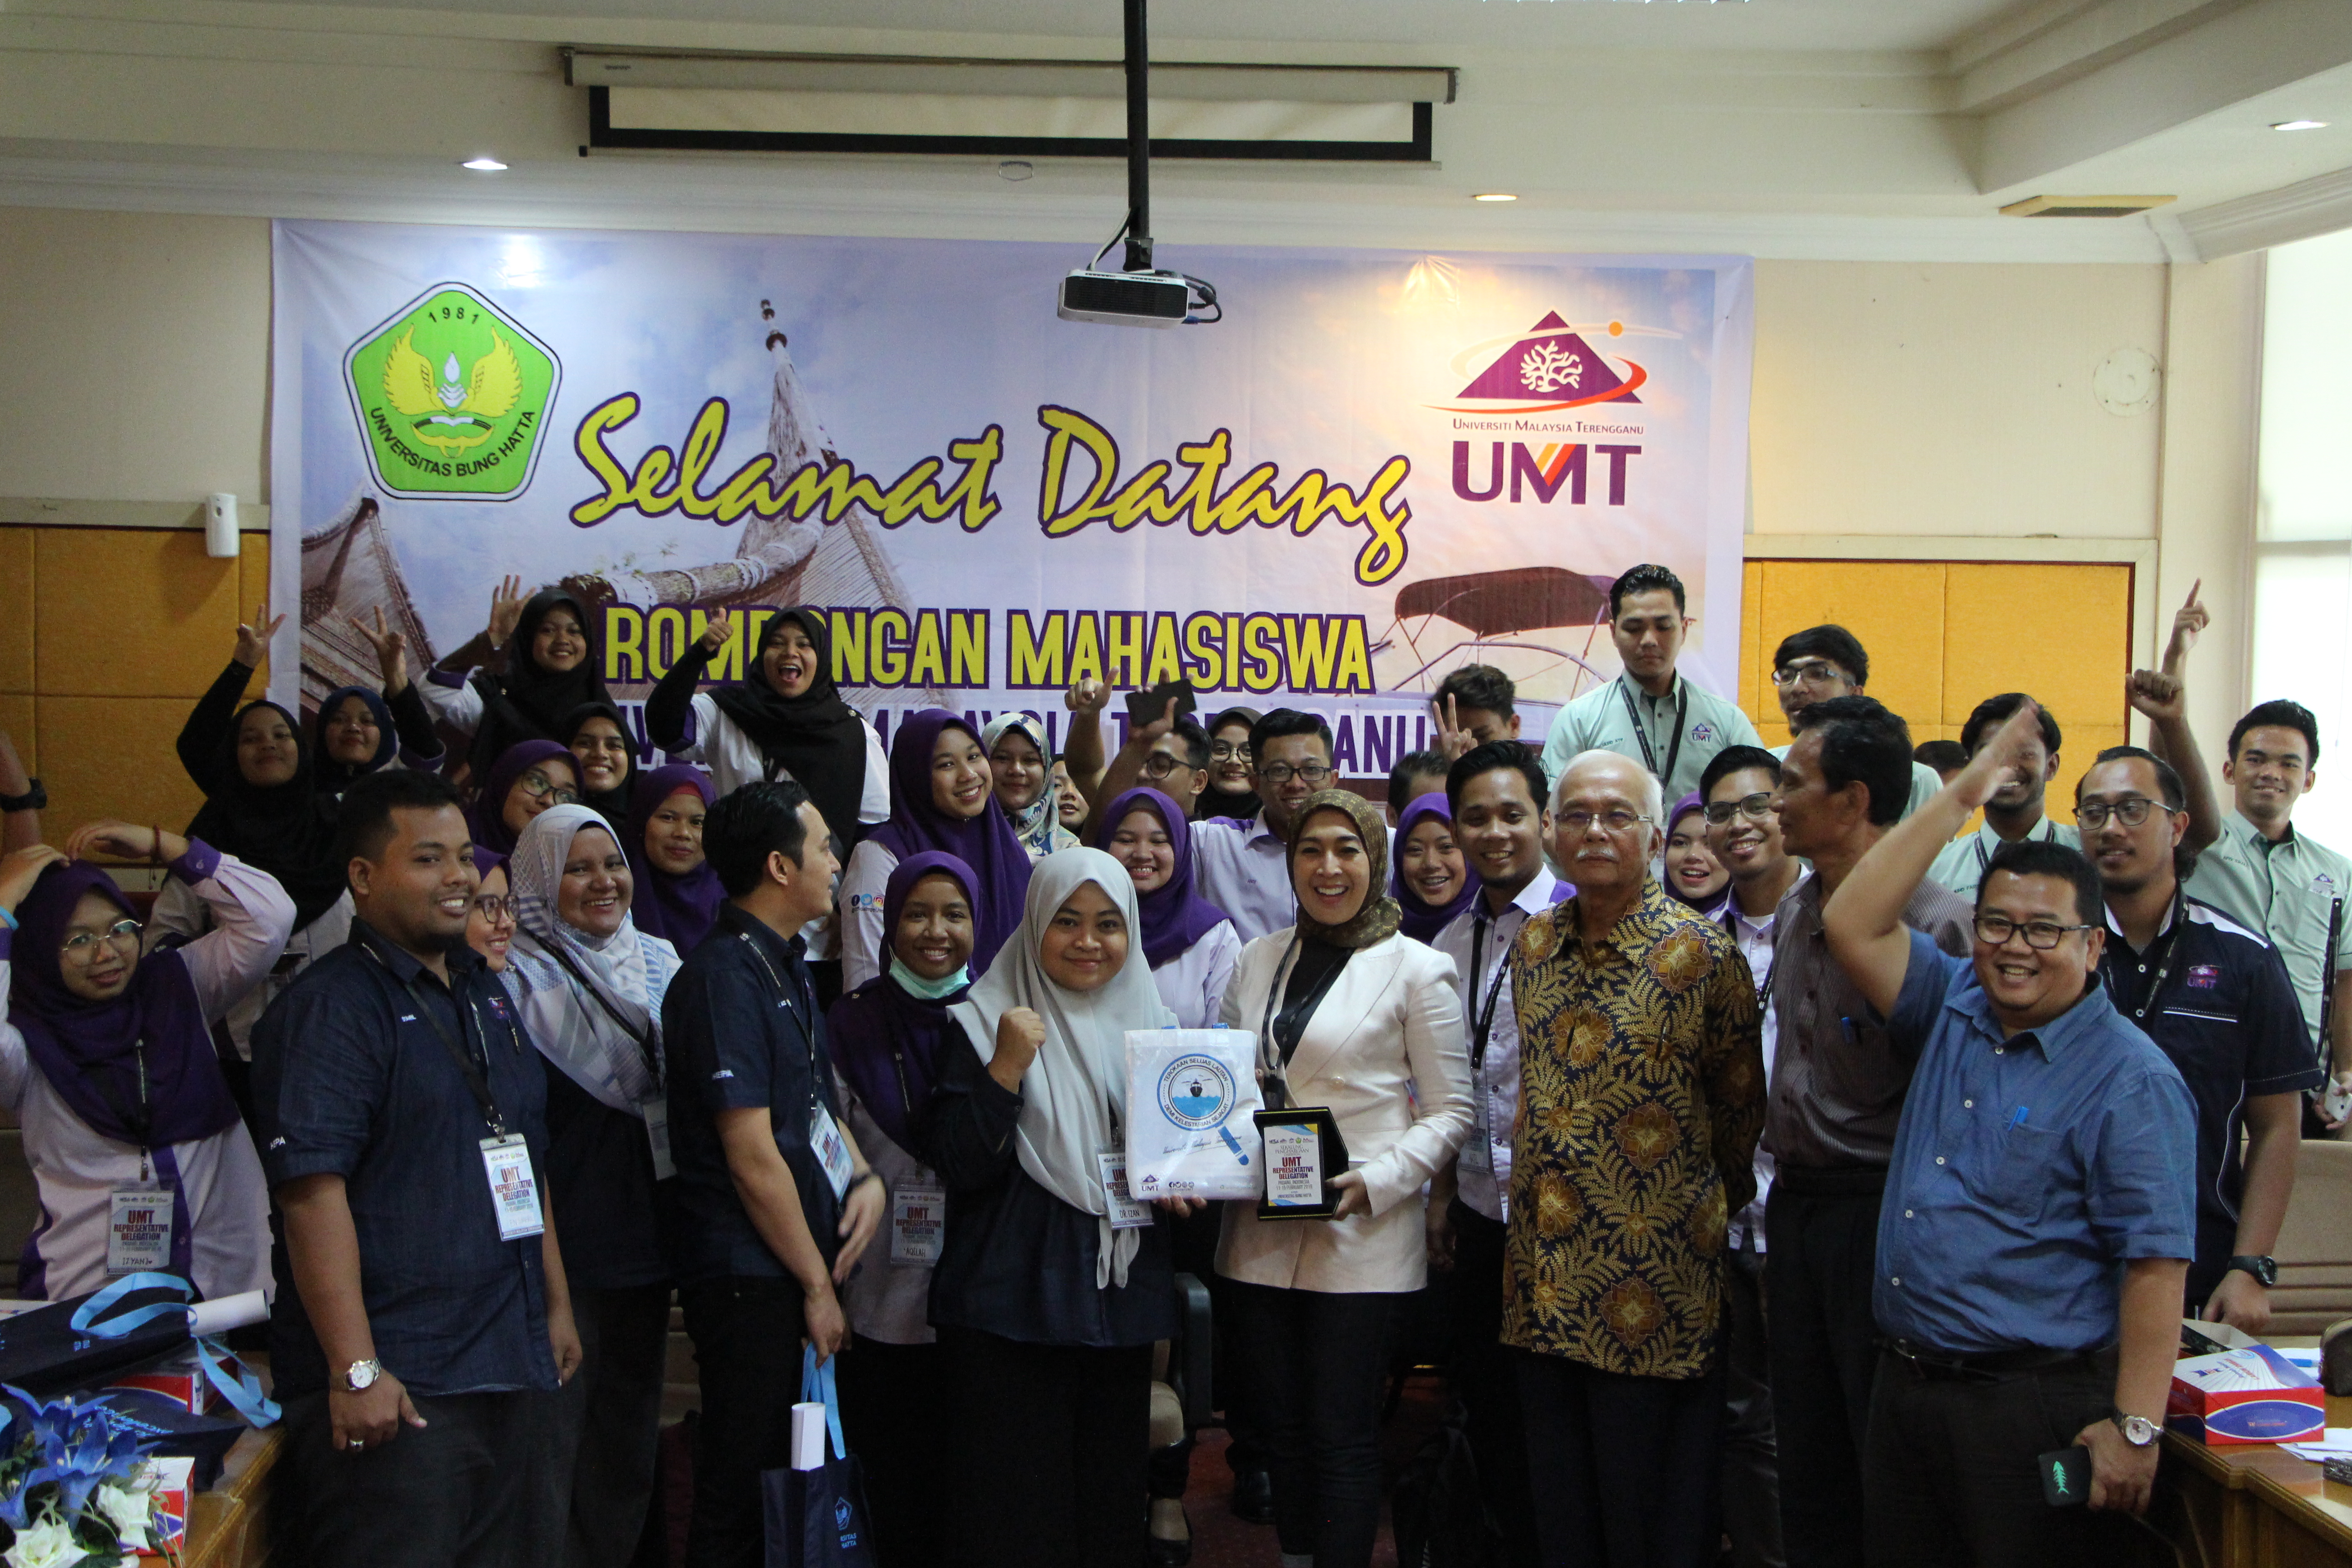  Delegasi Universiti Terengganu Malaysia (UMT) Kunjungi Universitas Bung Hatta (UBH).